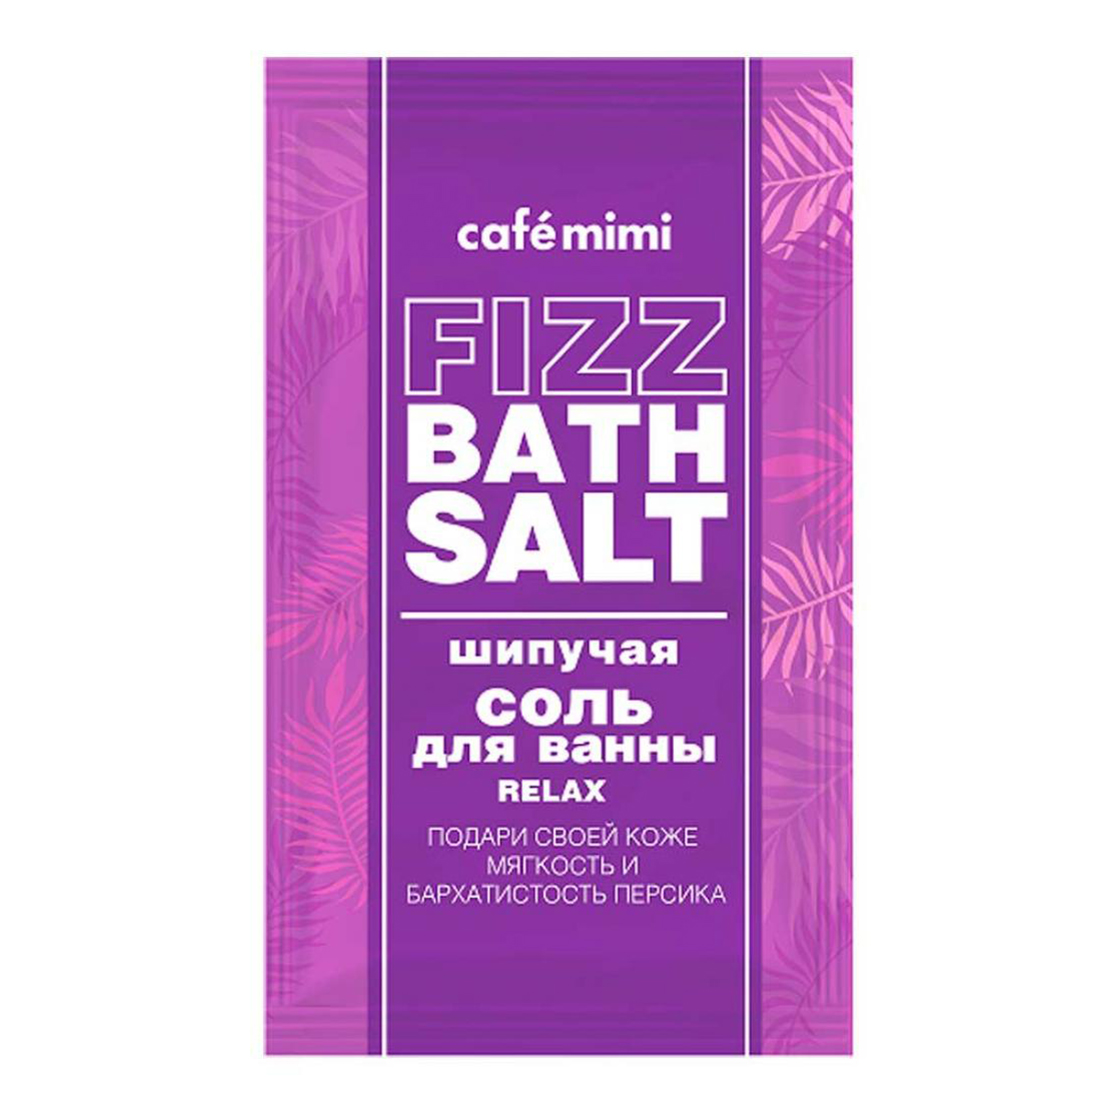 Соль для ванн Cafemimi Fizz Bath Salt Relax шипучая 100 г соль для ванн cafemimi fizz bath salt relax шипучая 100 г